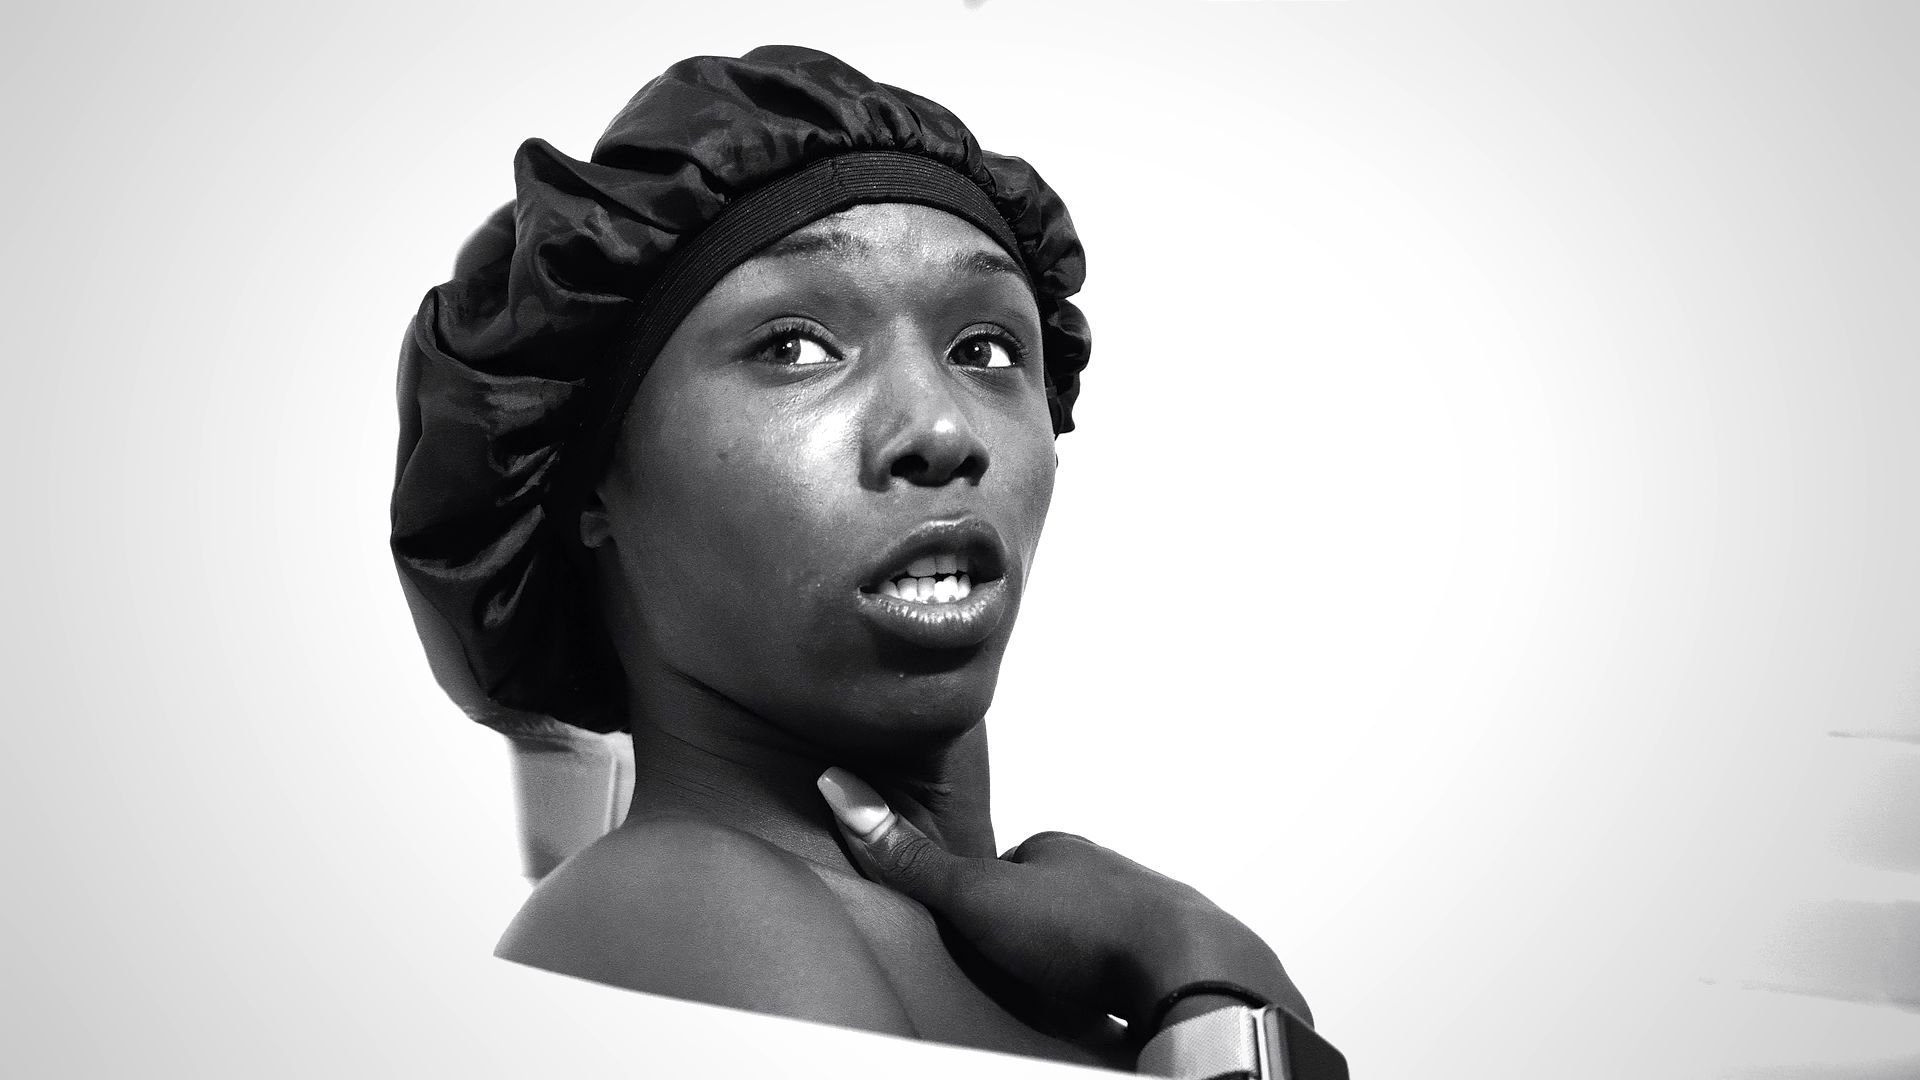 Kokomo City Frank, empowering doc showcases Black trans sex workers photo